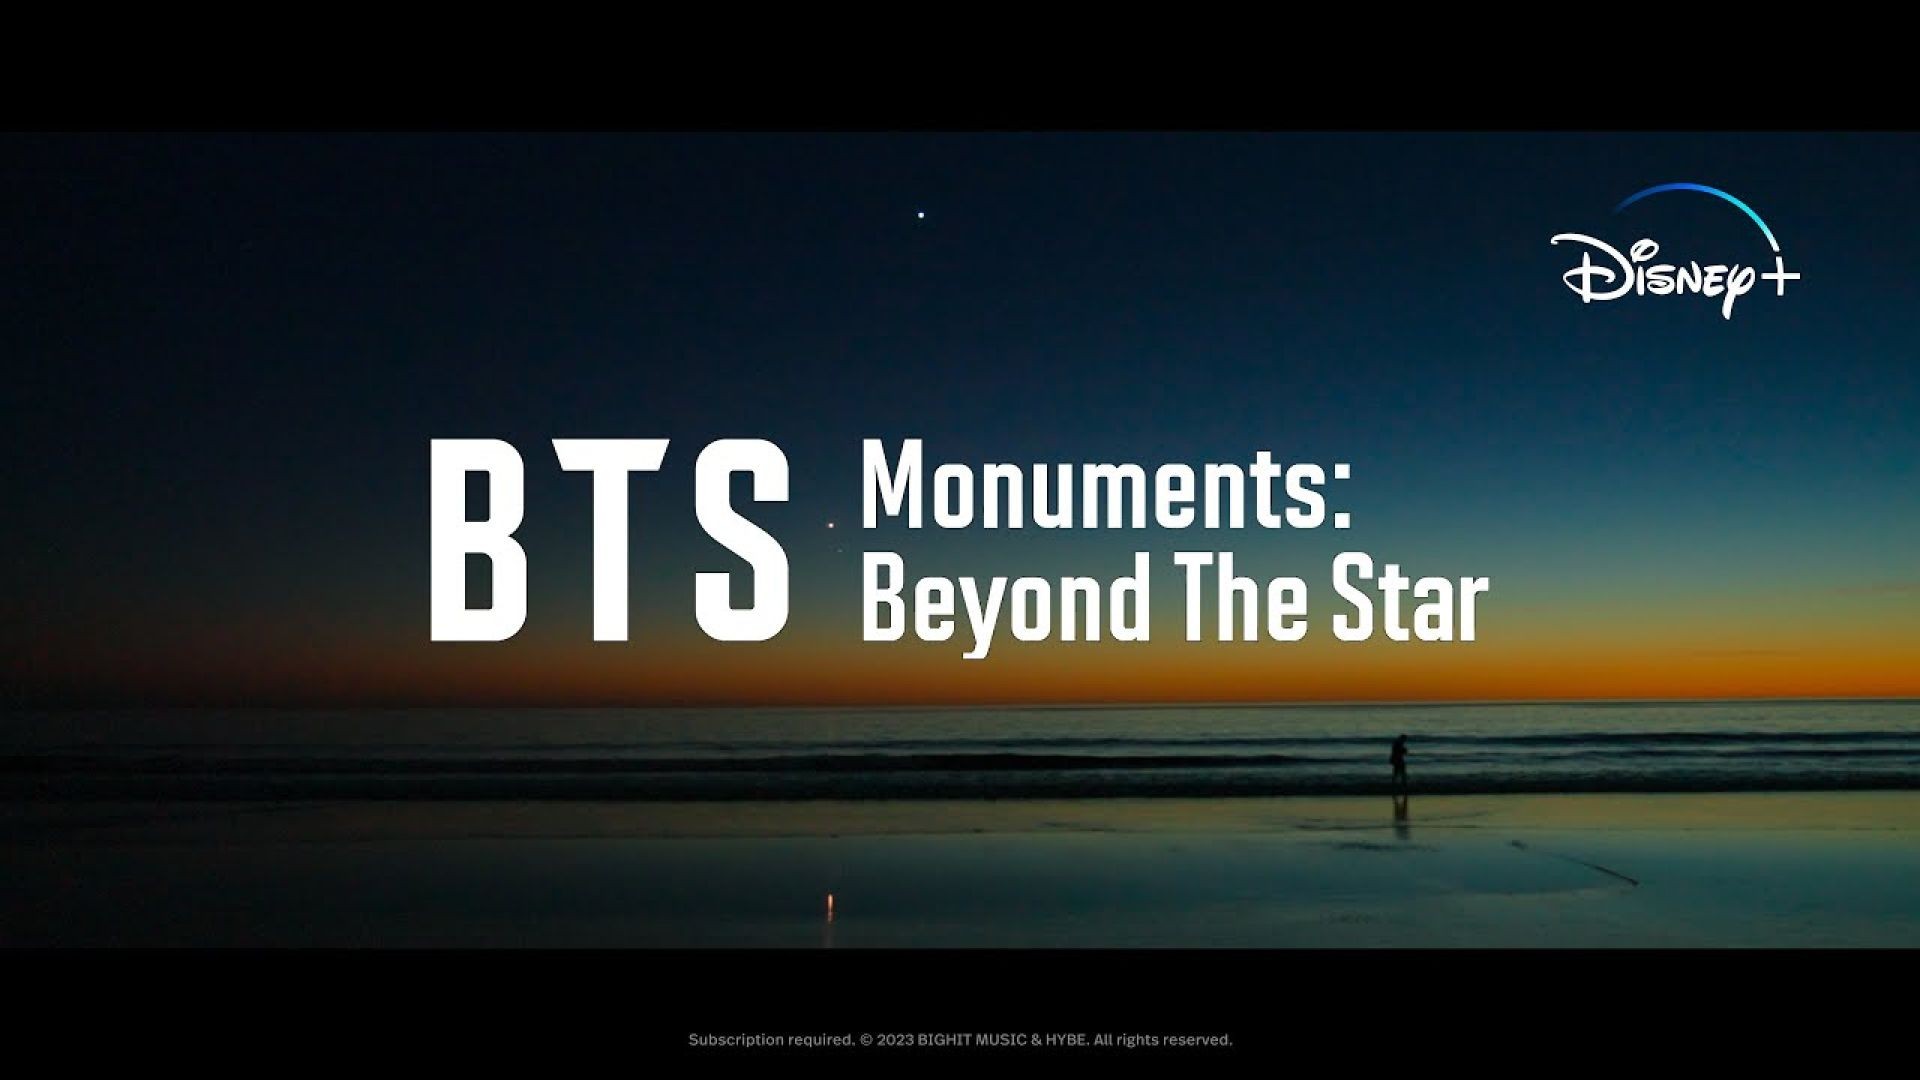 EP 7 - Still Purple - BTS Monuments: Beyond The Star